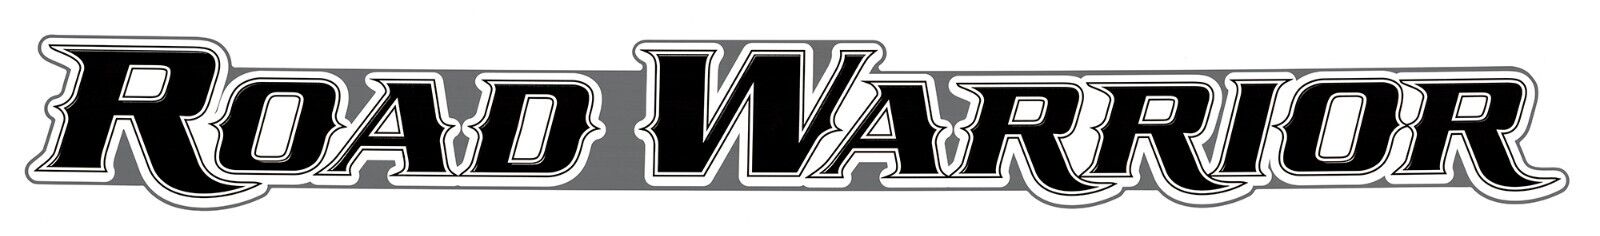 1 RV Camper Trailer Heartland Road Warrior Logo Decal Graphic-2527